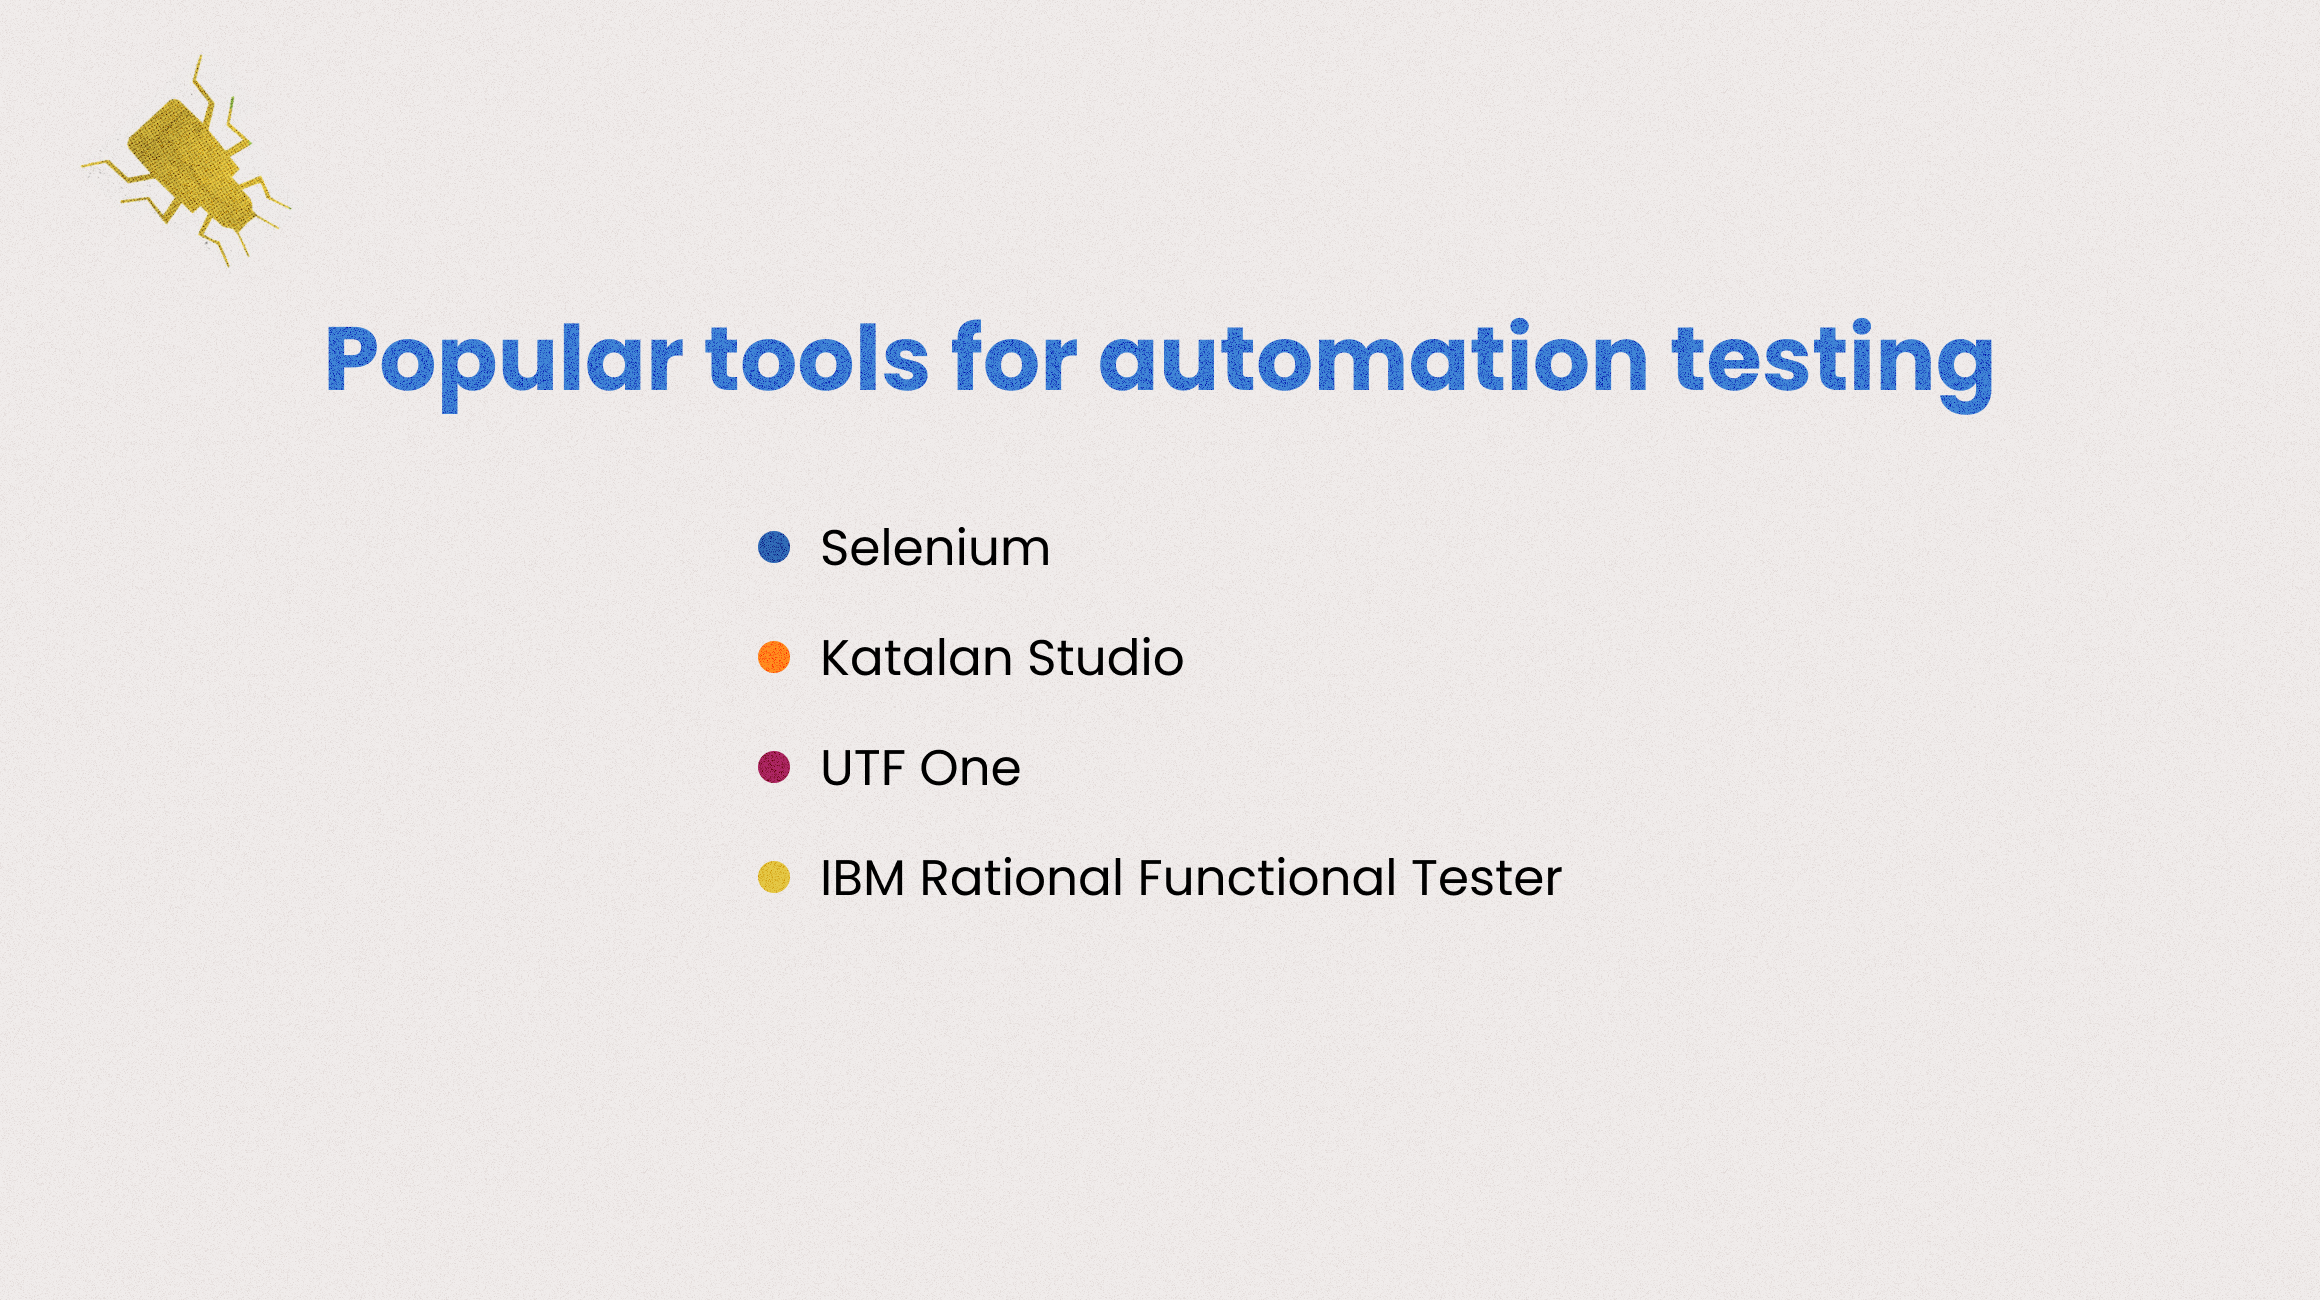 automated testing tools